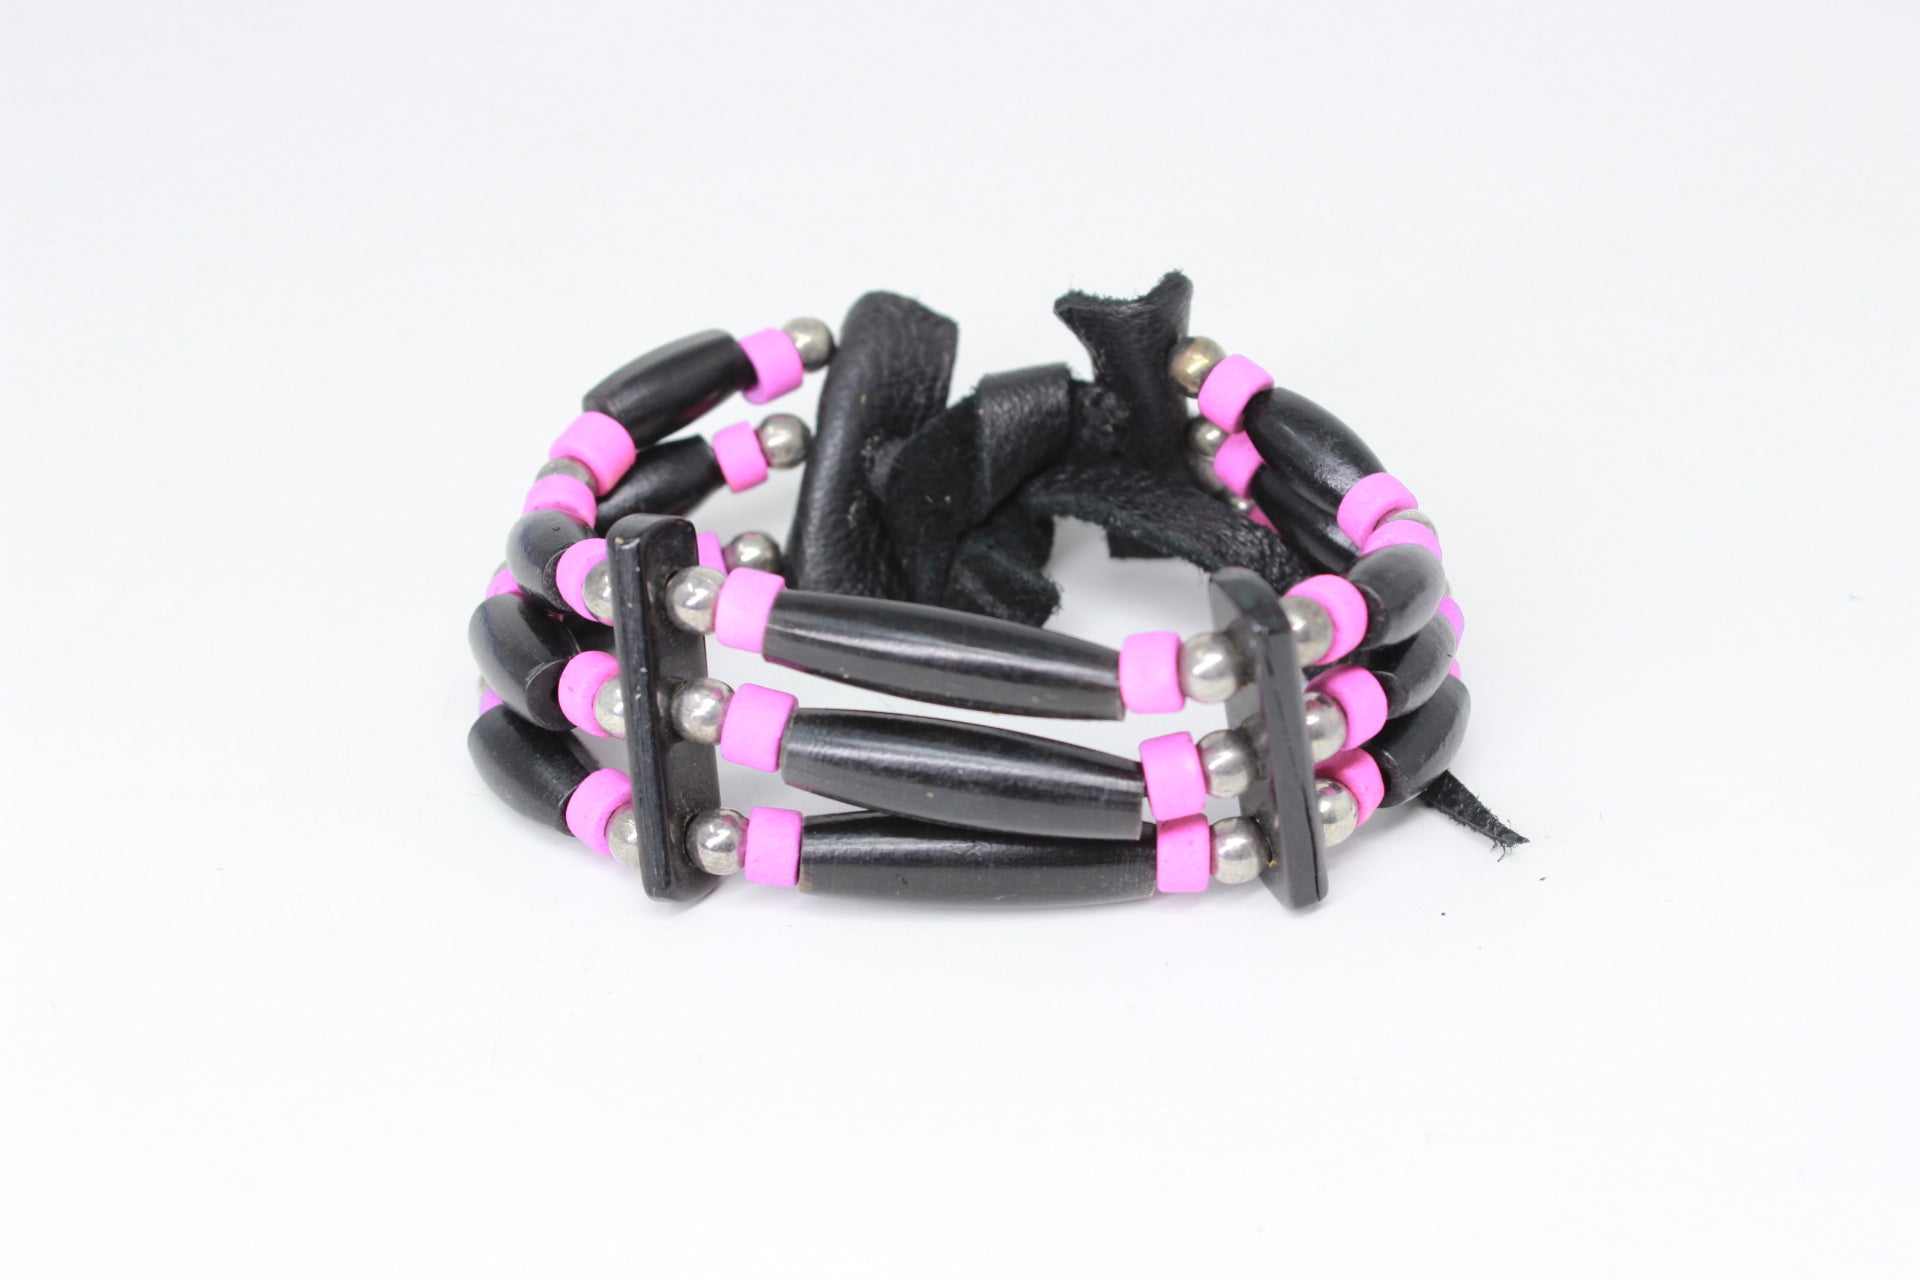 Multi-Strand Hairpipe Bracelet